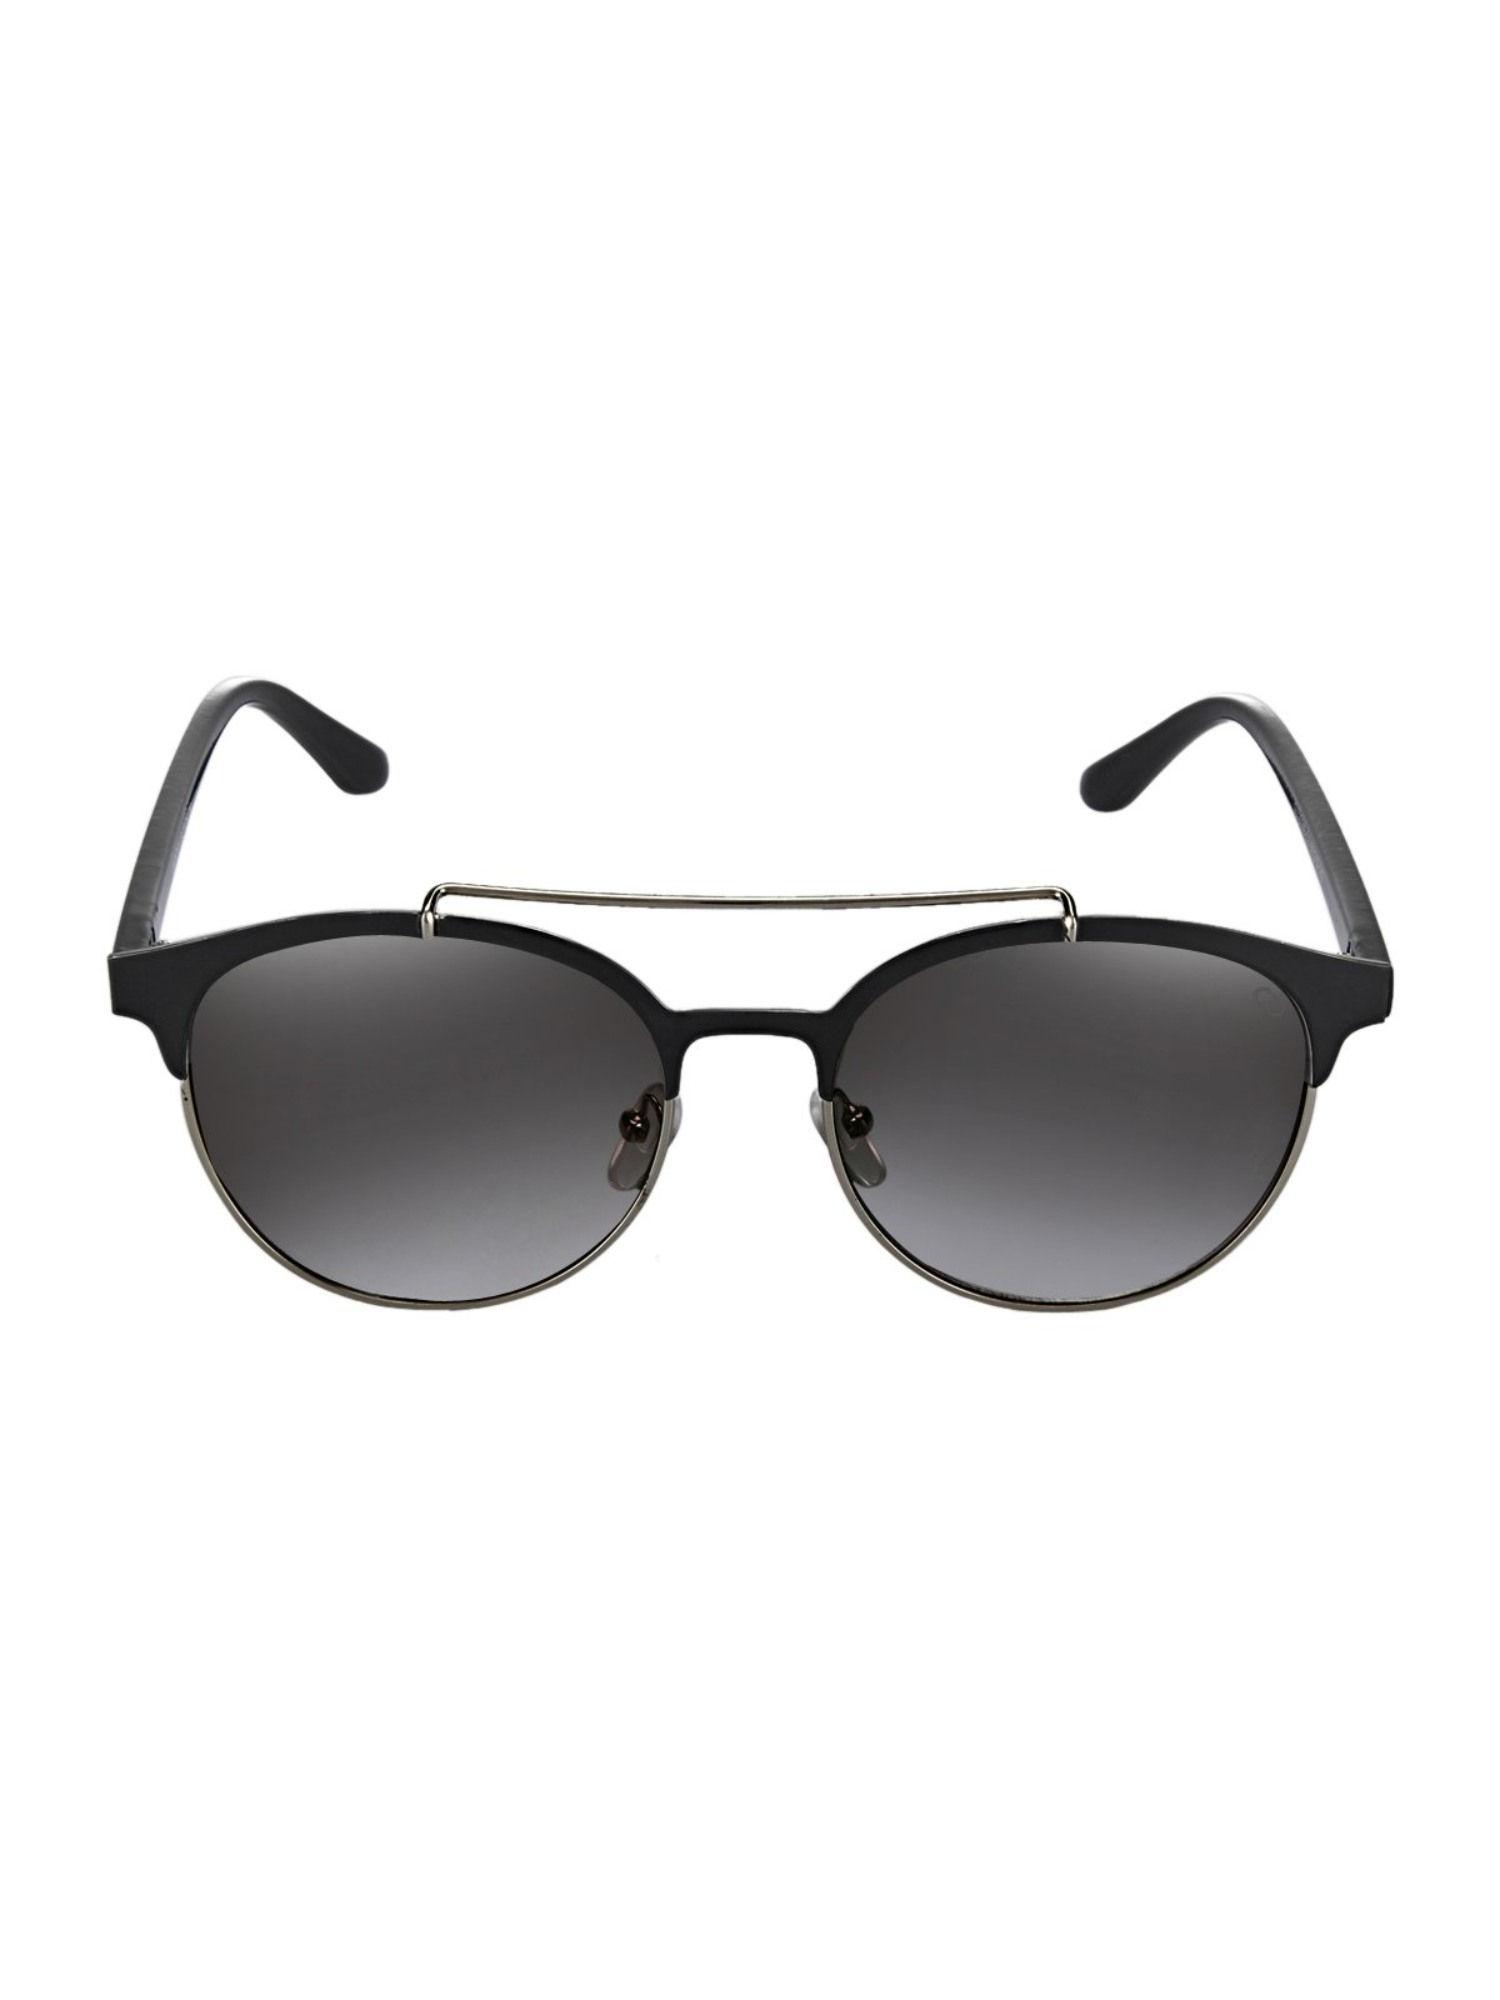 uv protected butterfly unisex sunglasses - black frame